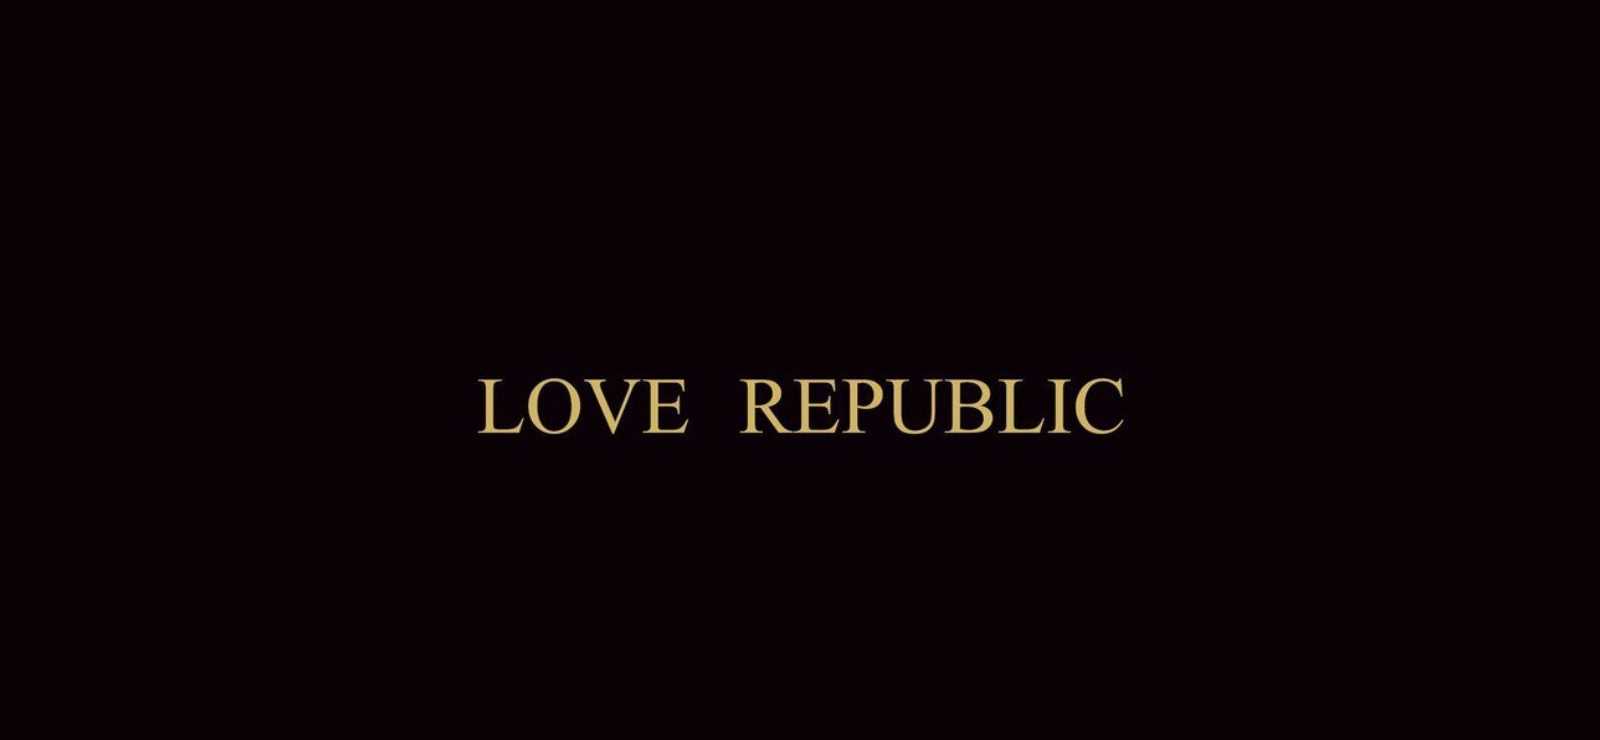 Лов республика интернет. Love Republic логотип. Лав Репаблик лого. Love Republic одежда логотип. Love Republic надпись.